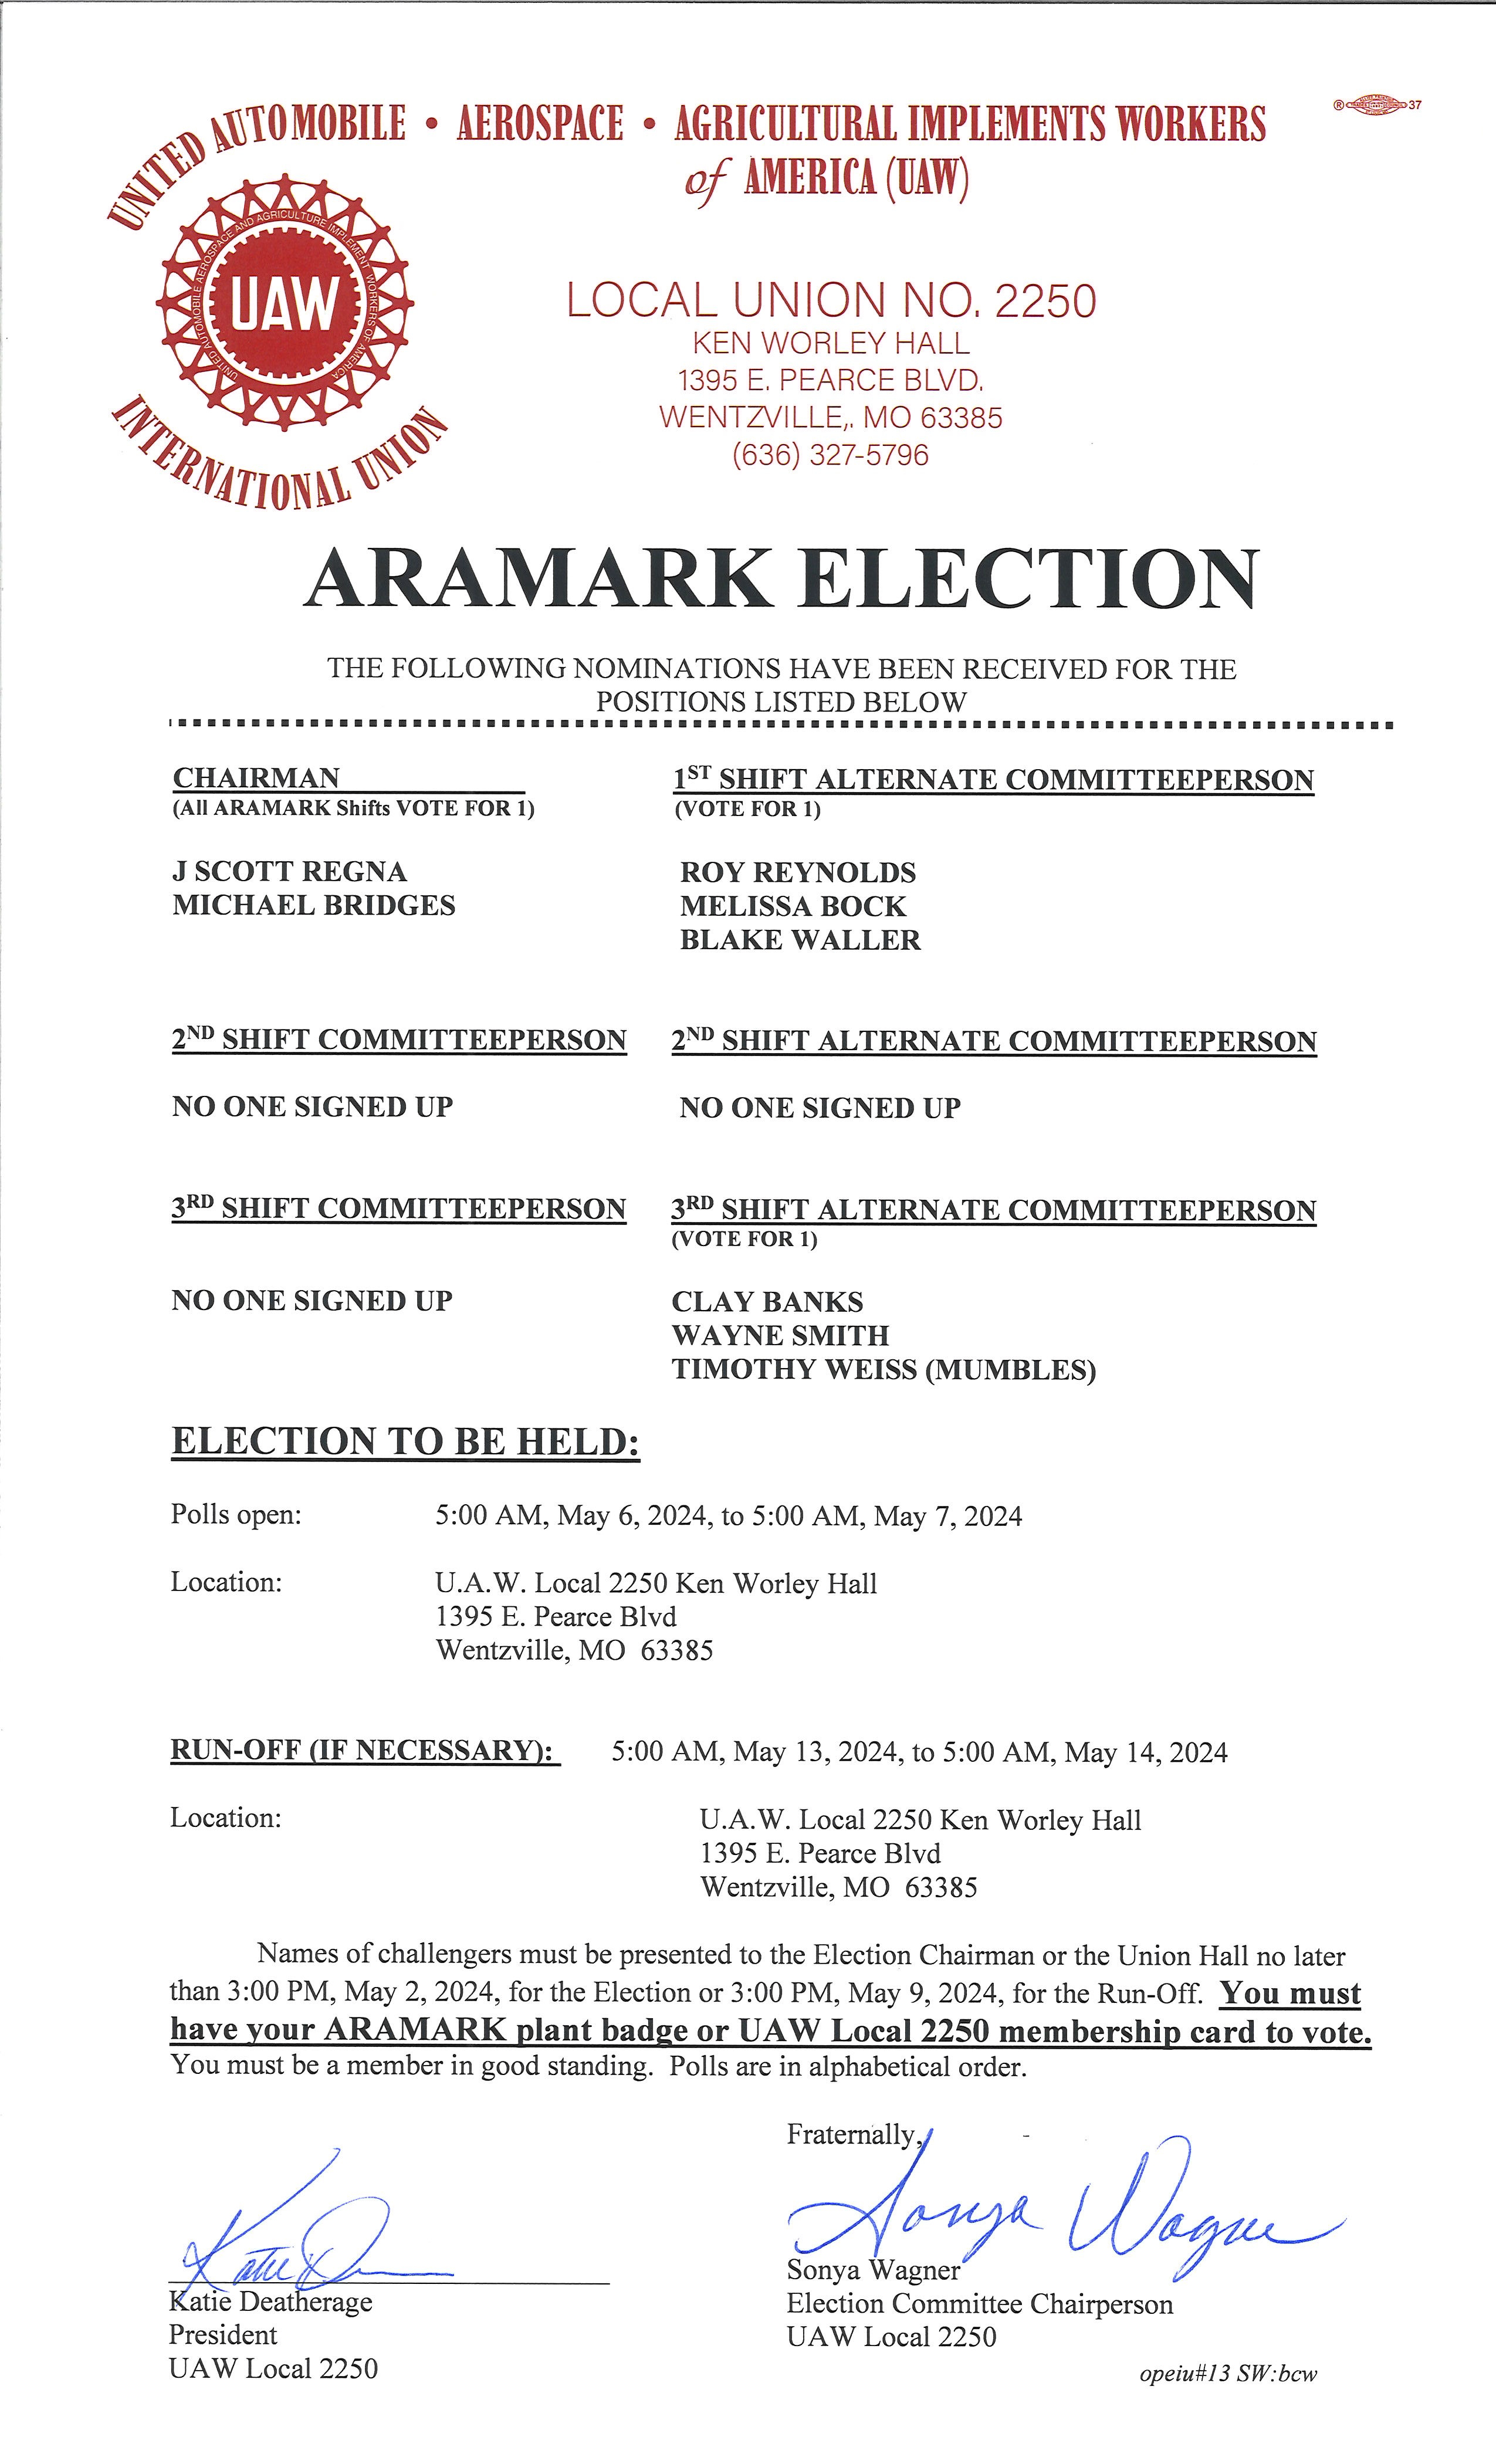 Notice: Aramark Election